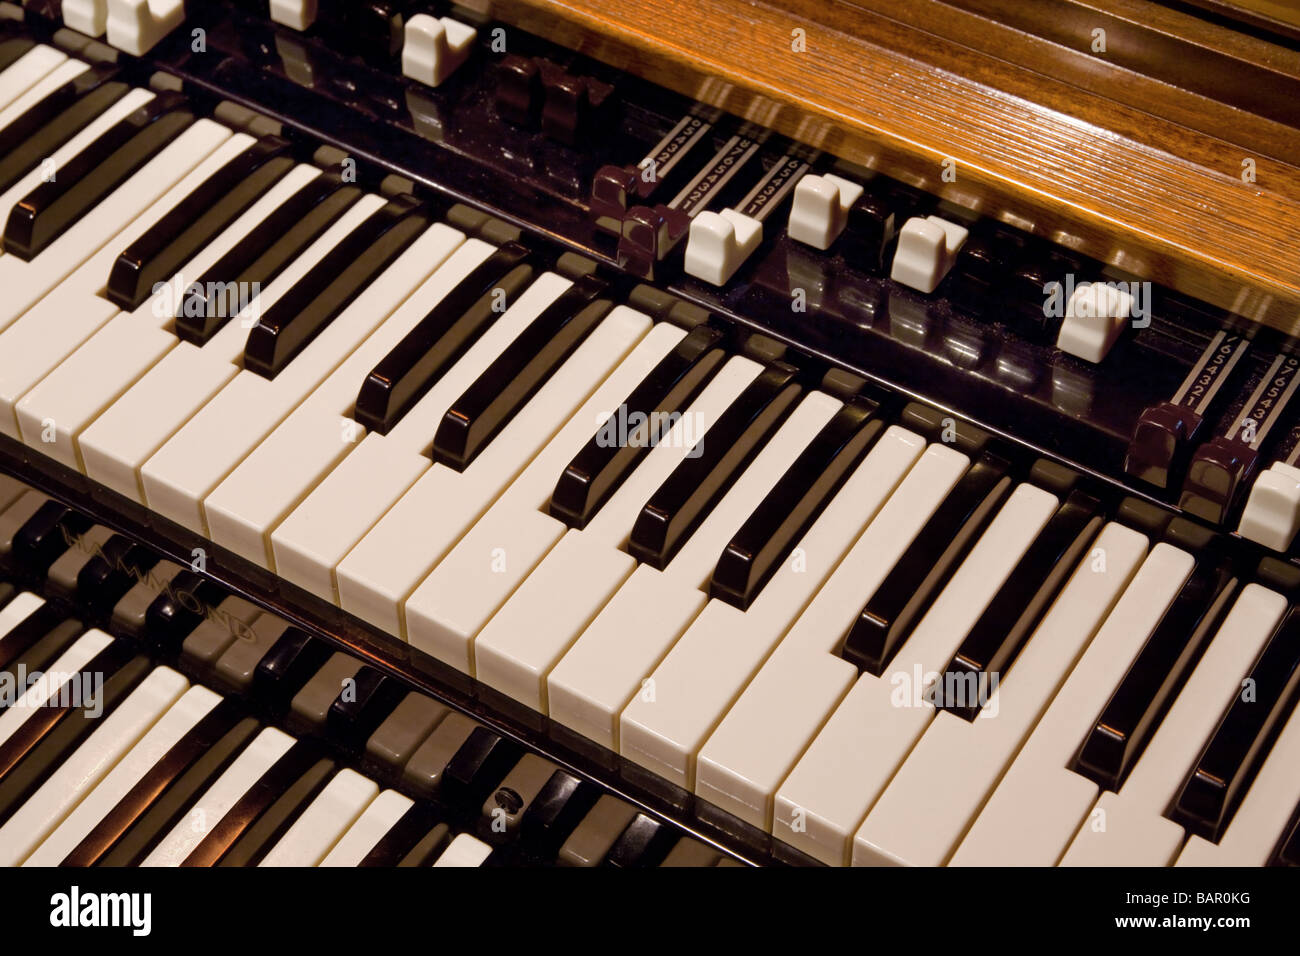 Closeup image of Hammond B3 Organ Keyboard with Drawbars Stock Photo - Alamy